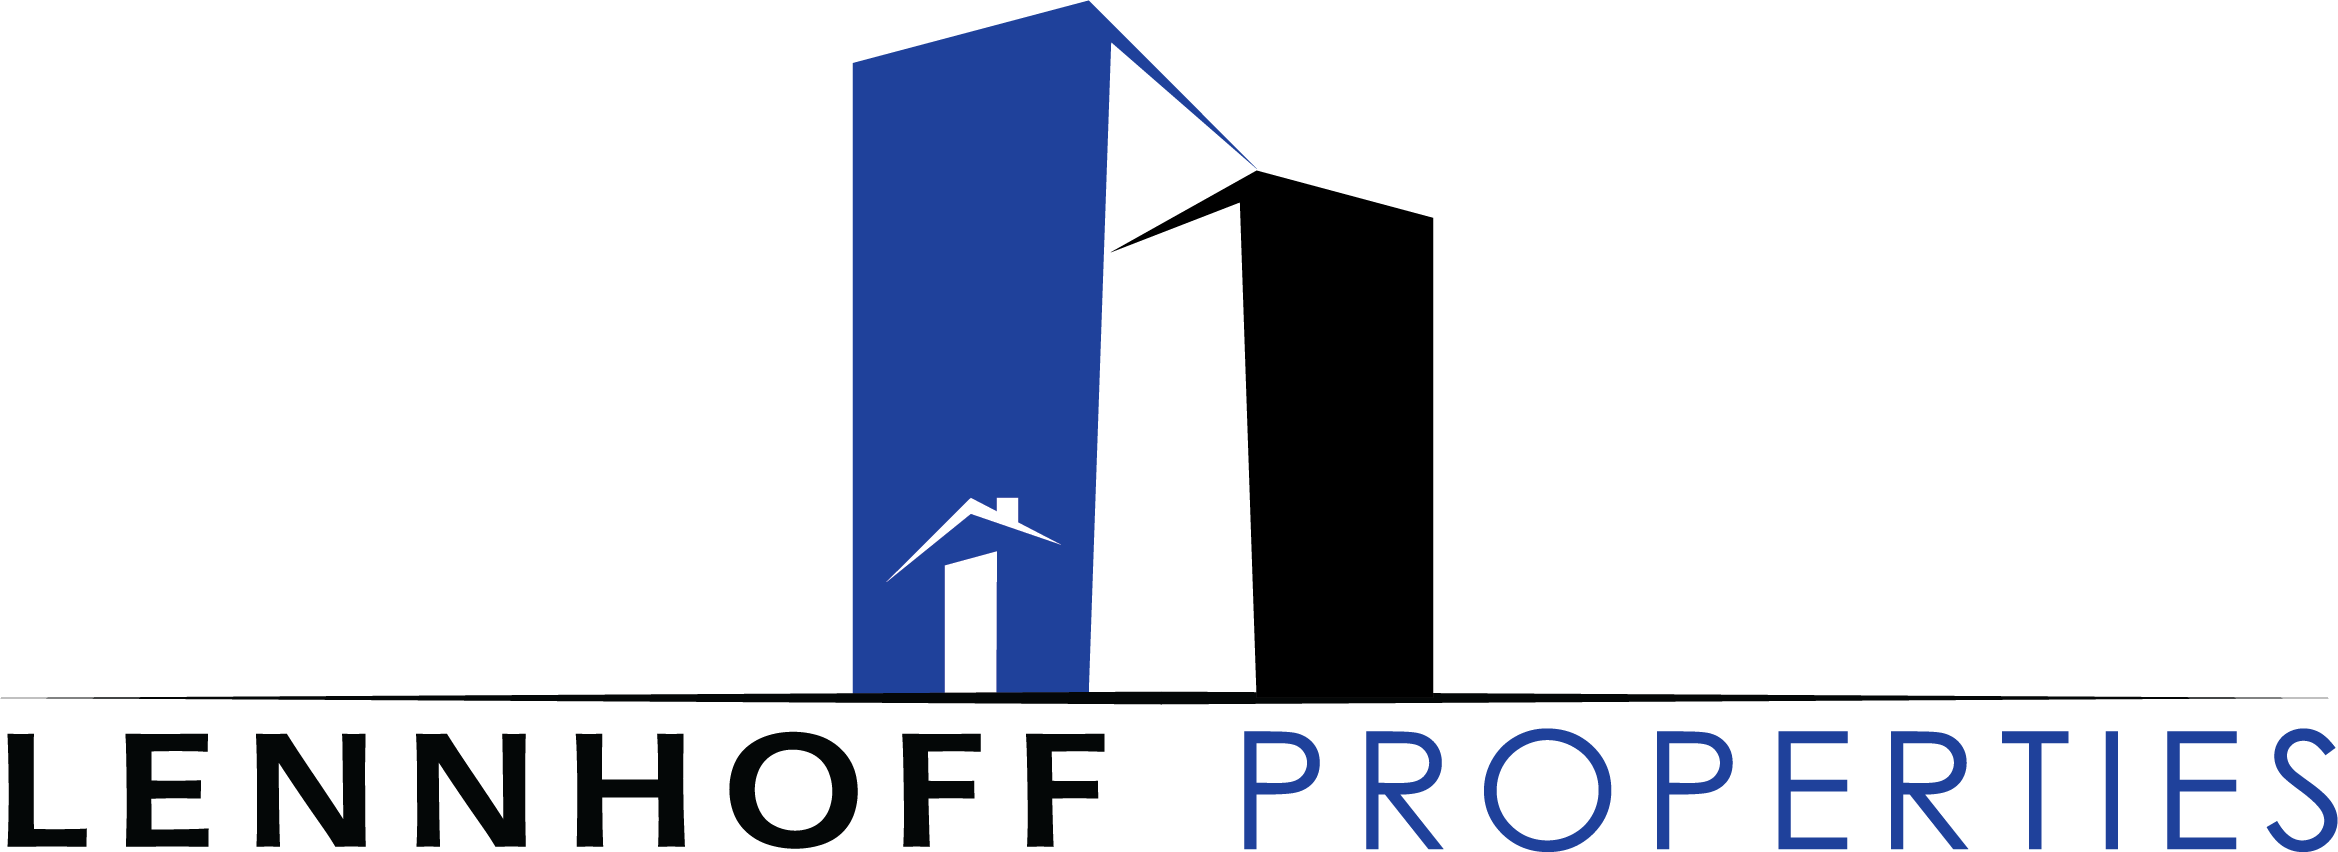 Lennhoff Properties LLC logo